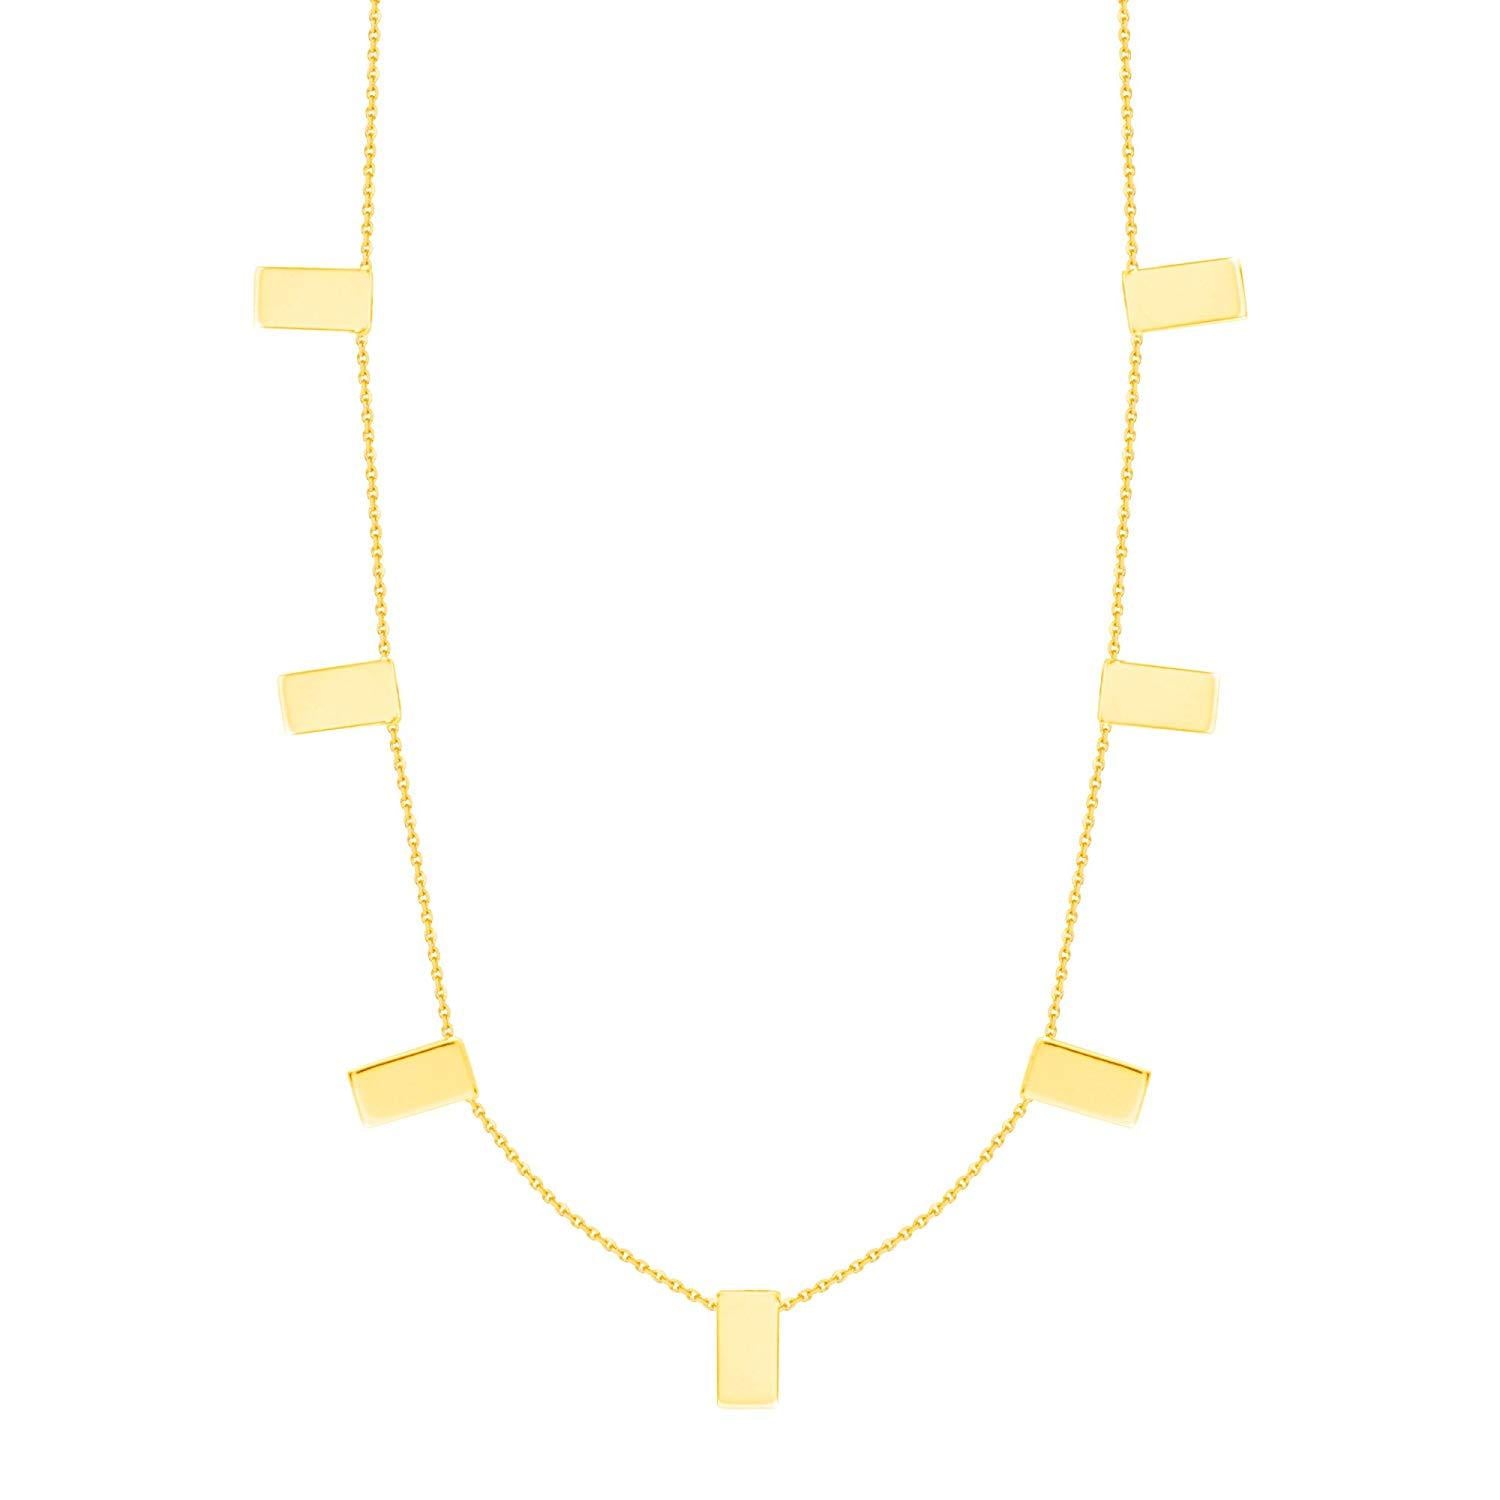 14K Gold Rectangle Tags Station Necklace | Avie Fine Jewelry